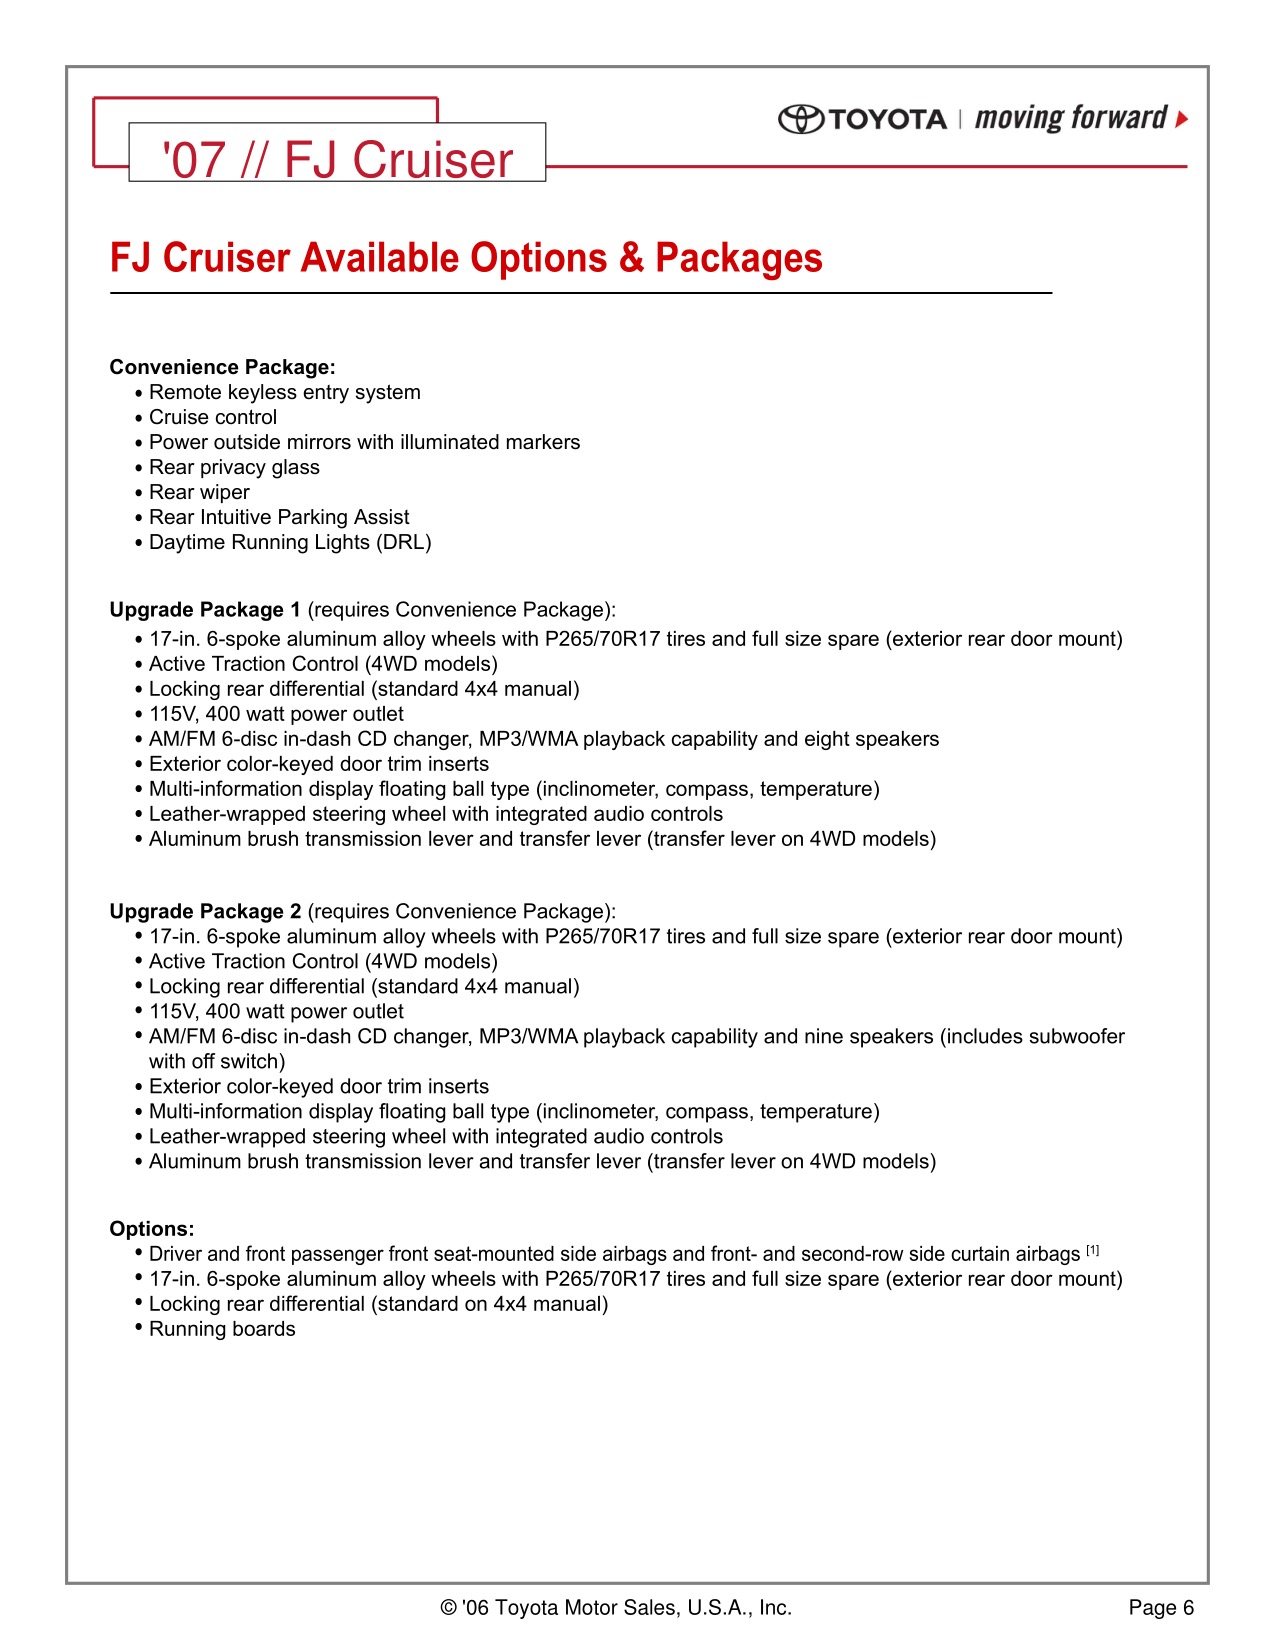 2013 Toyota FJ Cruiser Brochure Page 8